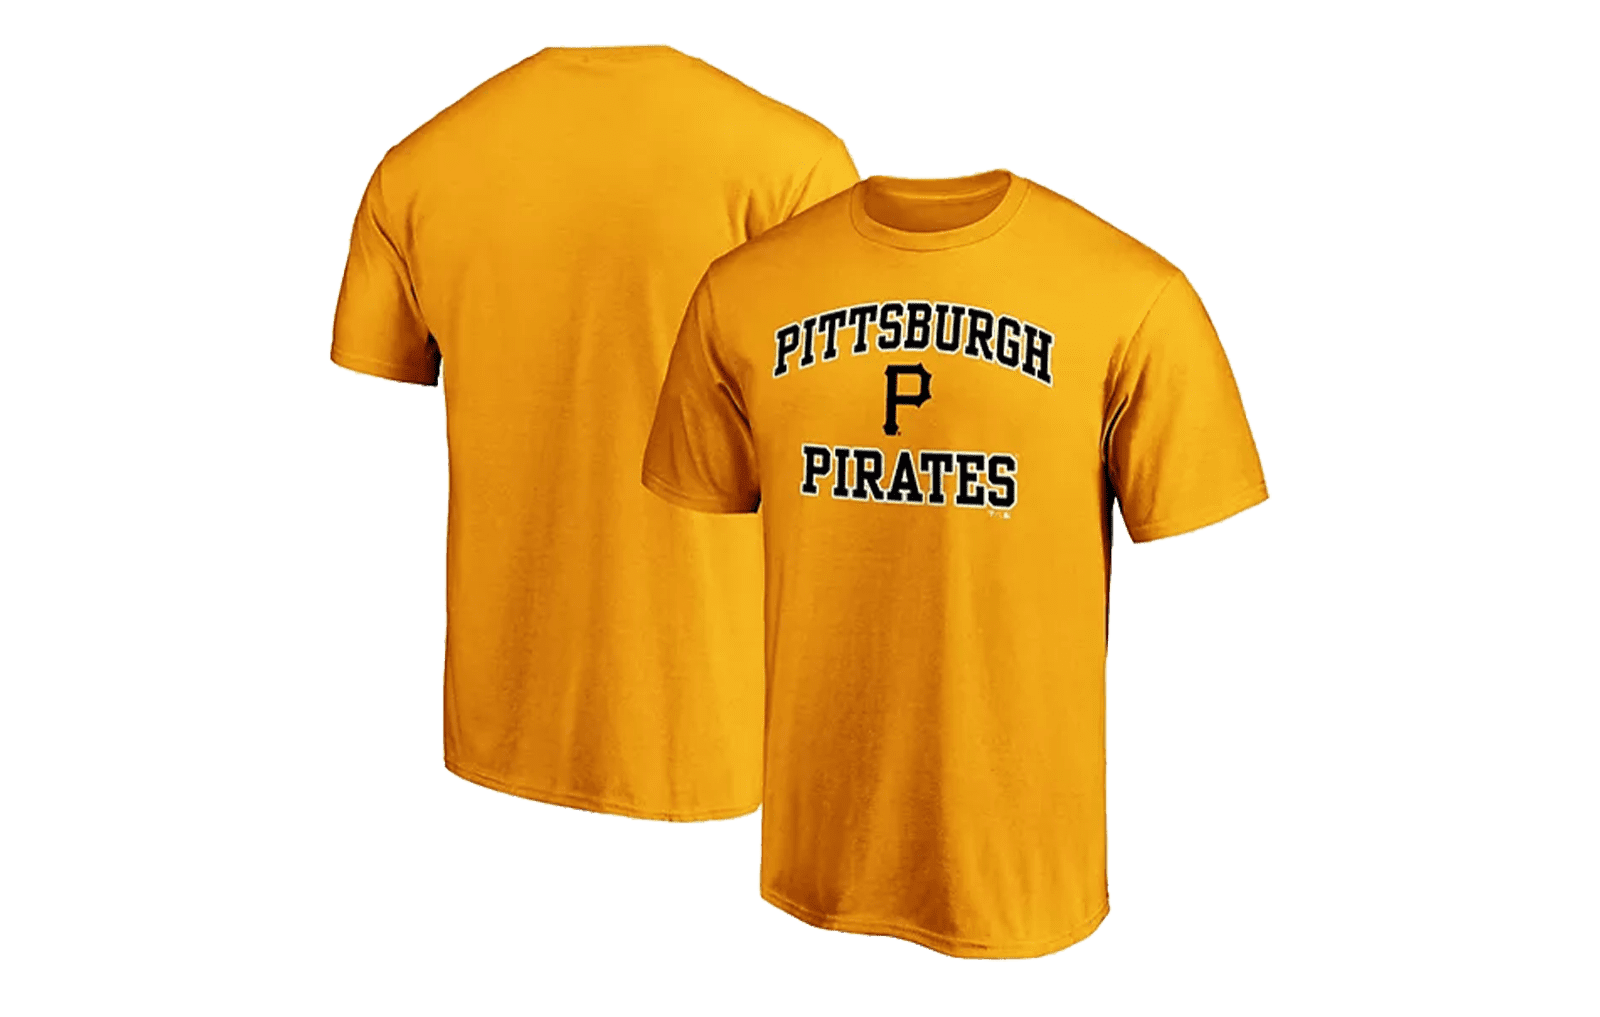 Pittsburgh Pirates Logo MLB Baseball Jersey Shirt For Men And Women -  Freedomdesign